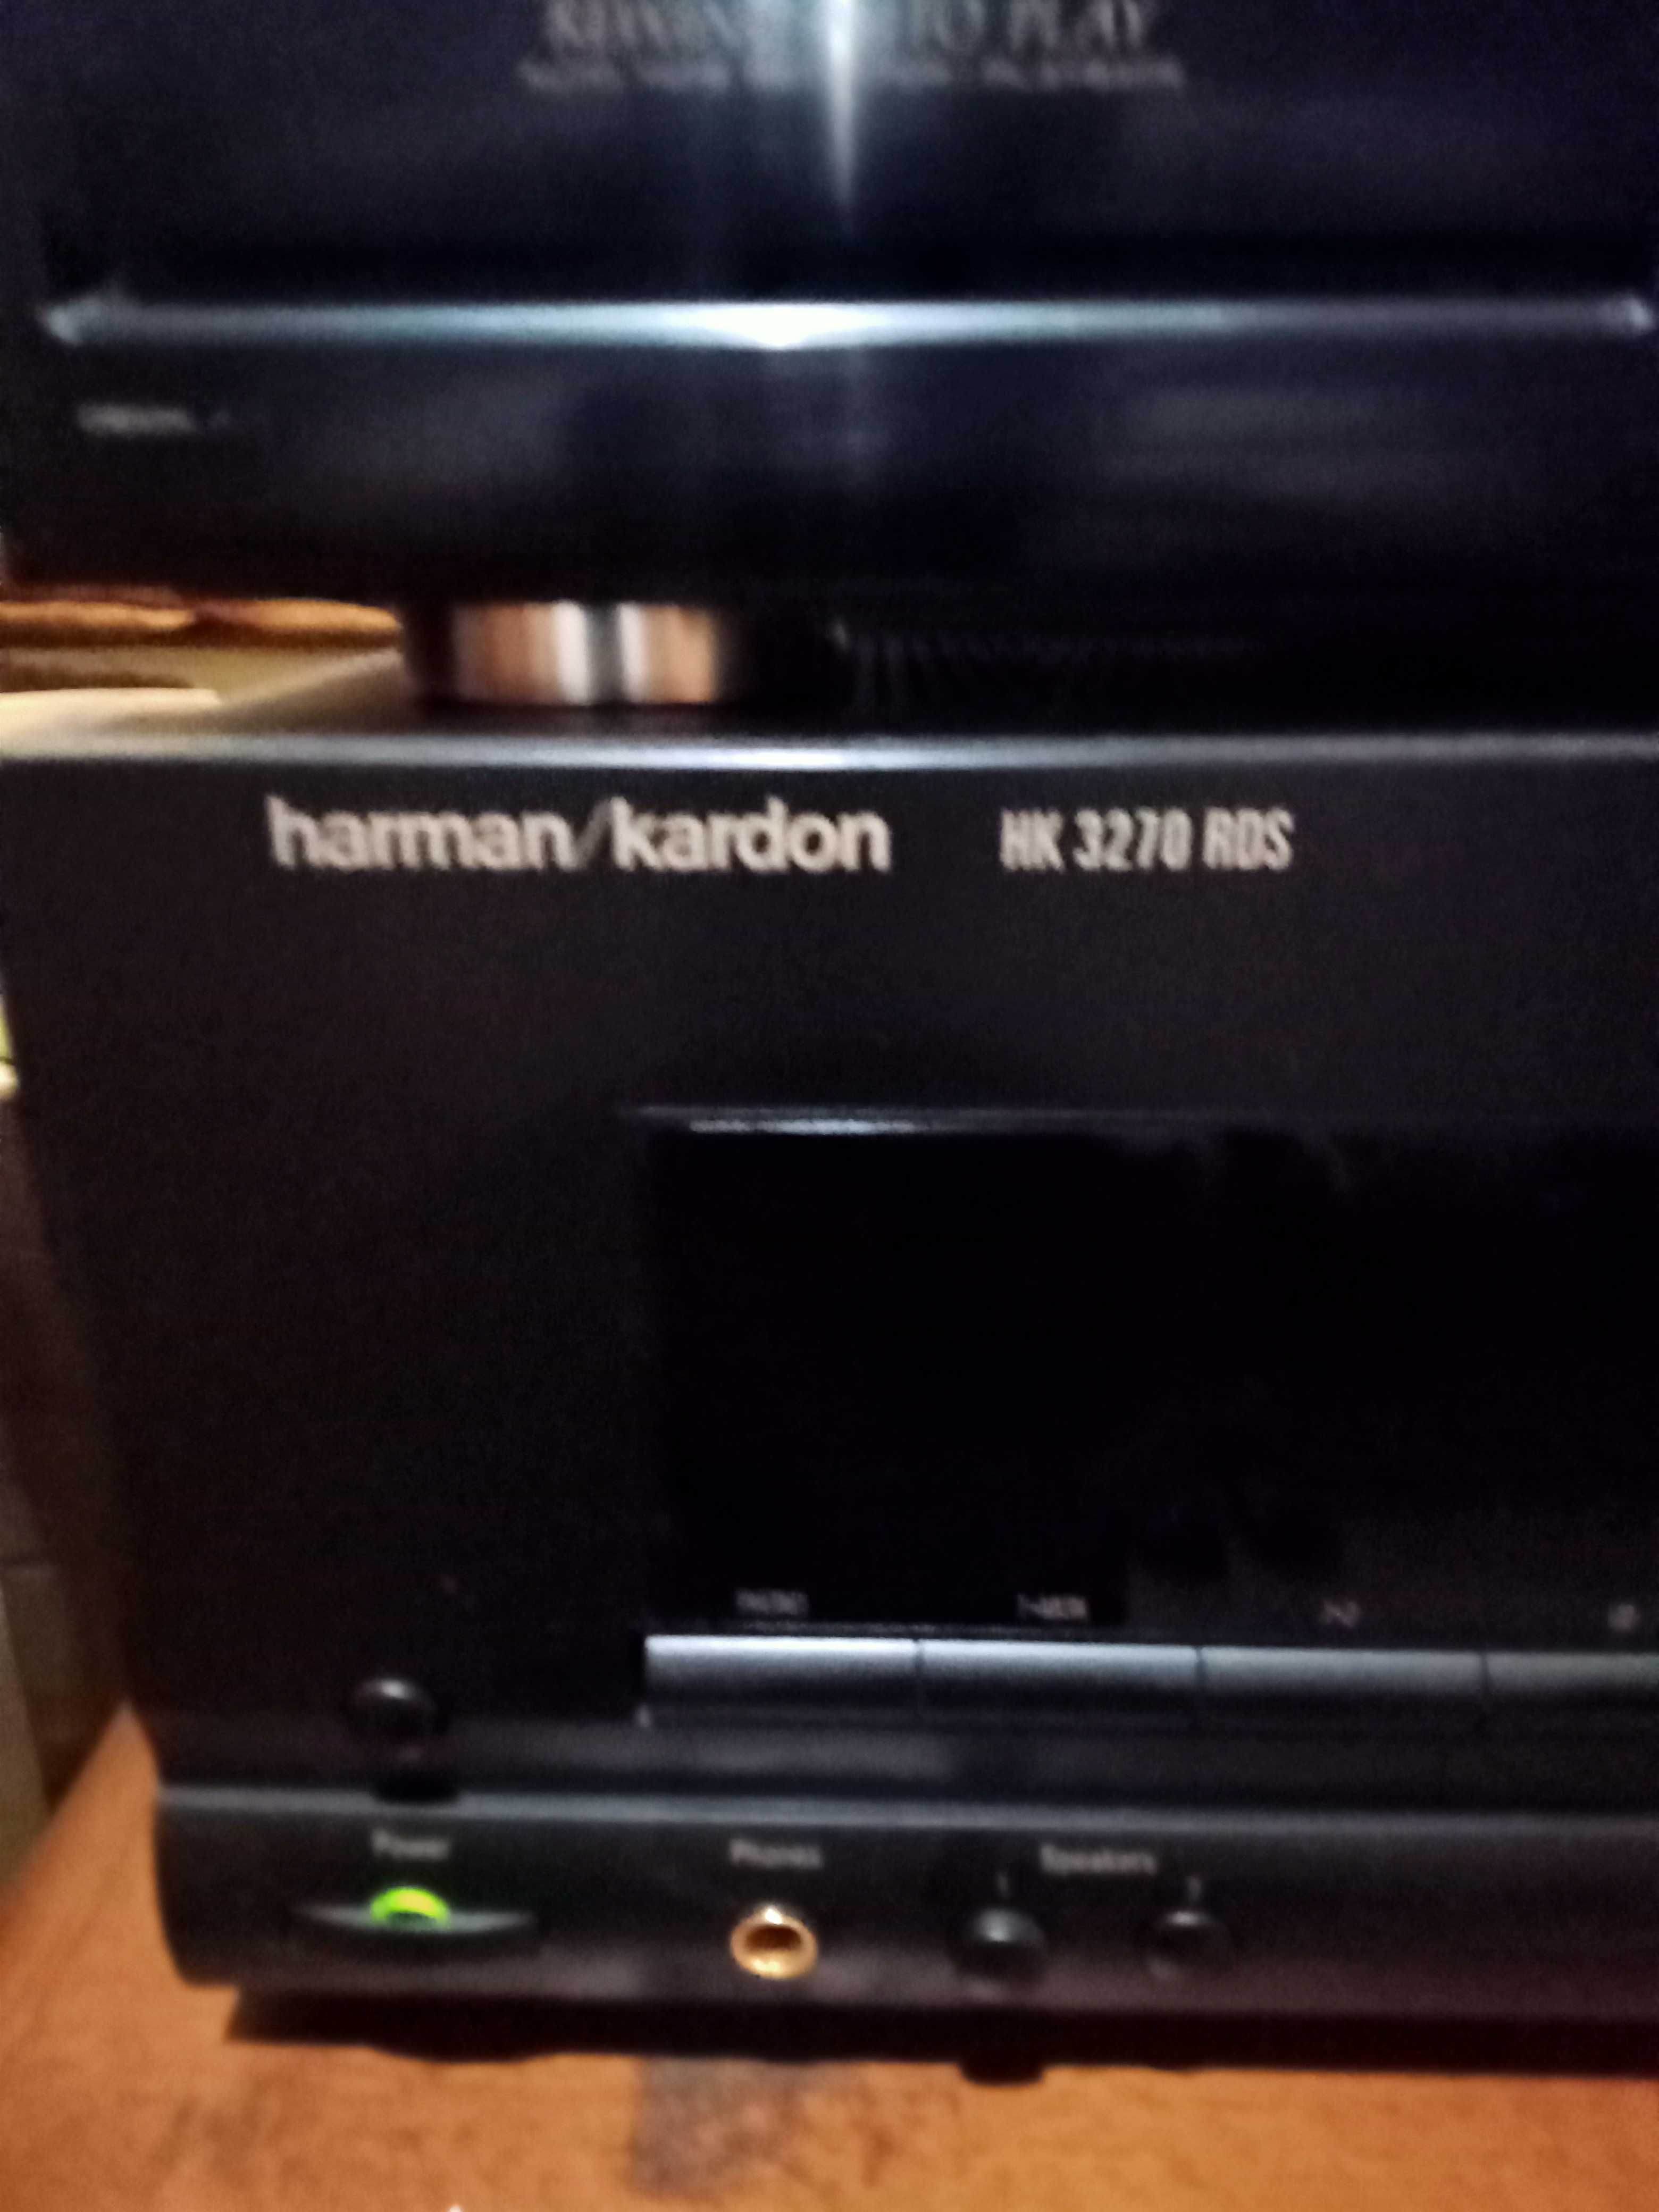 Harman Kardon 3270 RDS